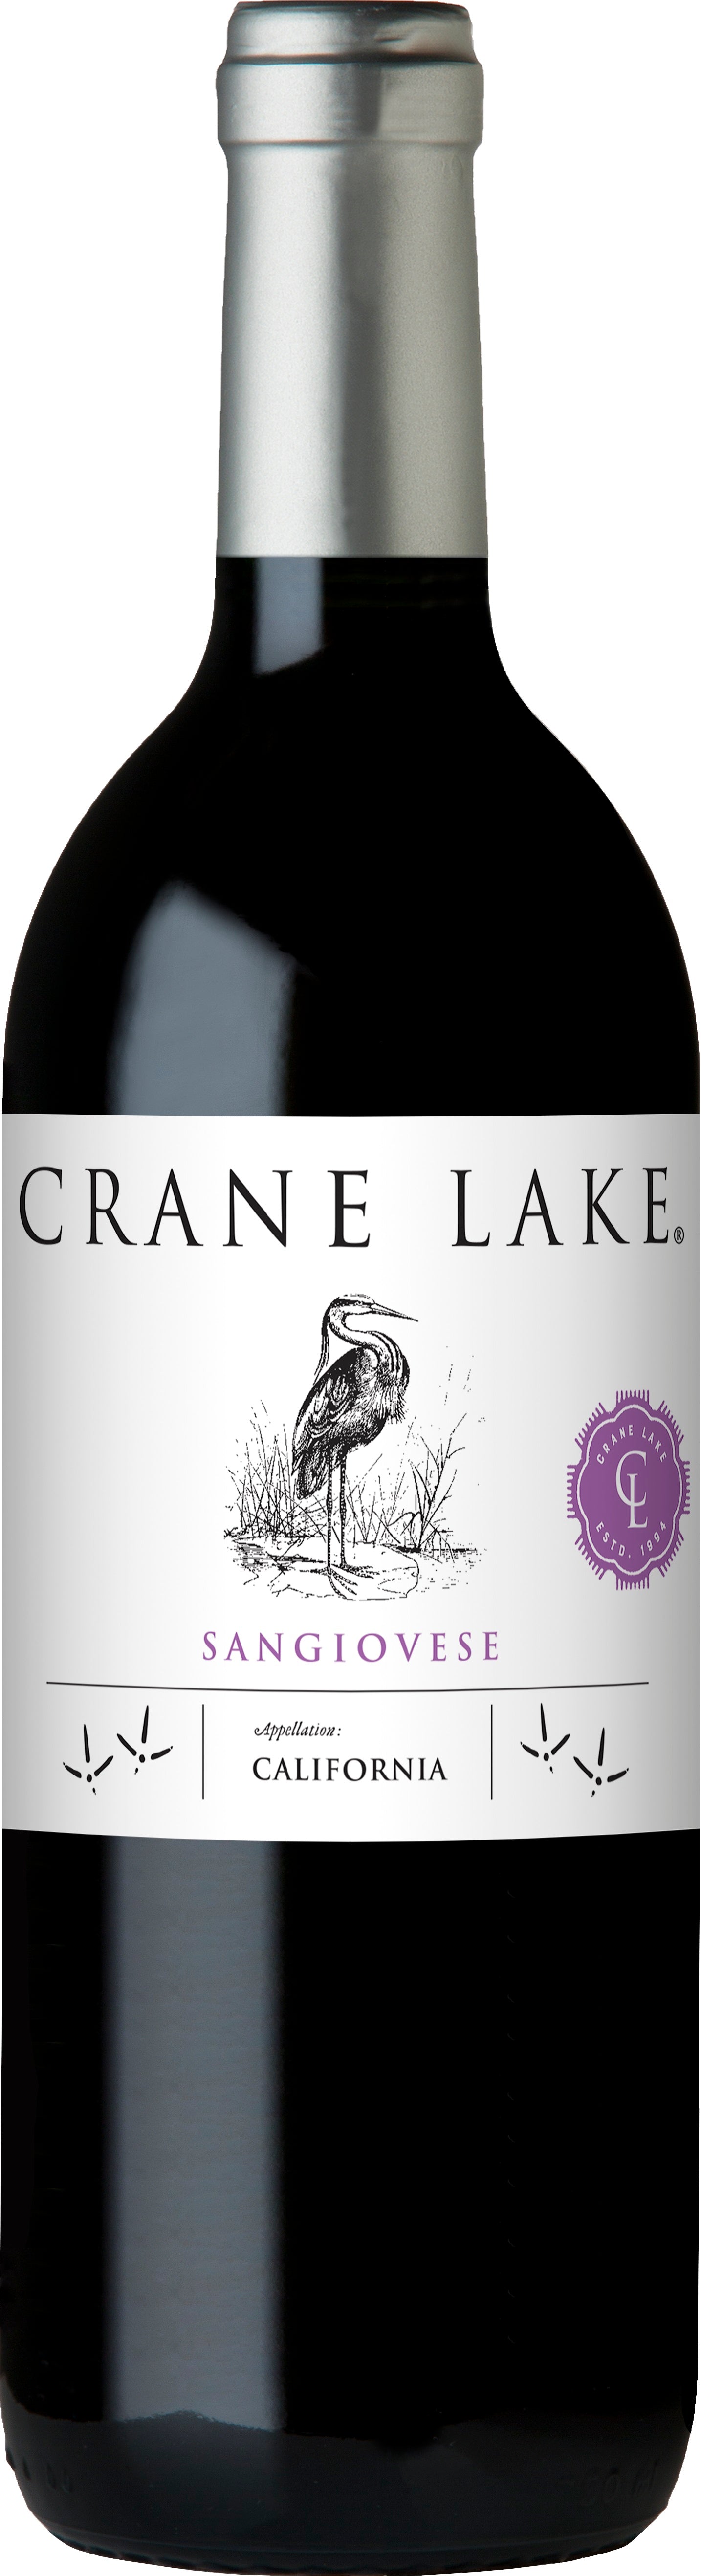 Crane Lake Sangiovese 2015